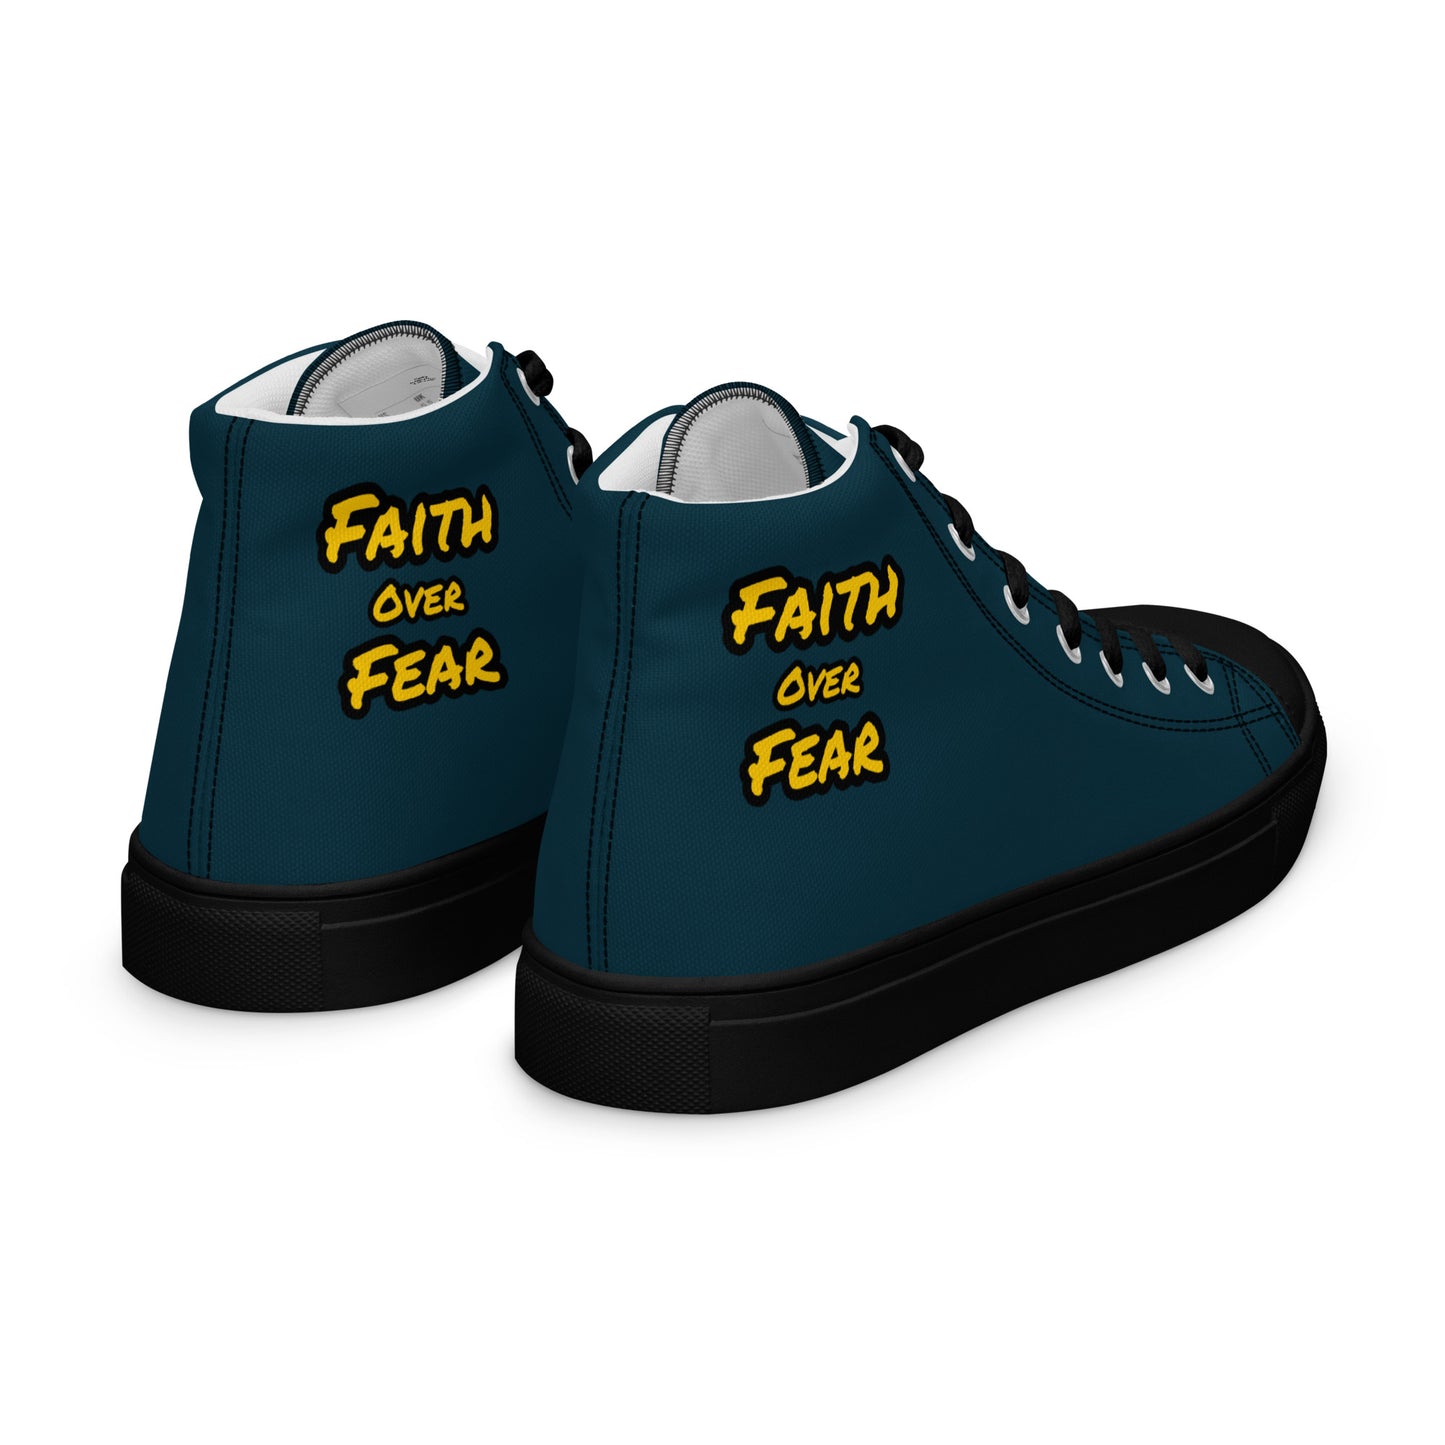 Men’s High Top Canvas Faith Shoes